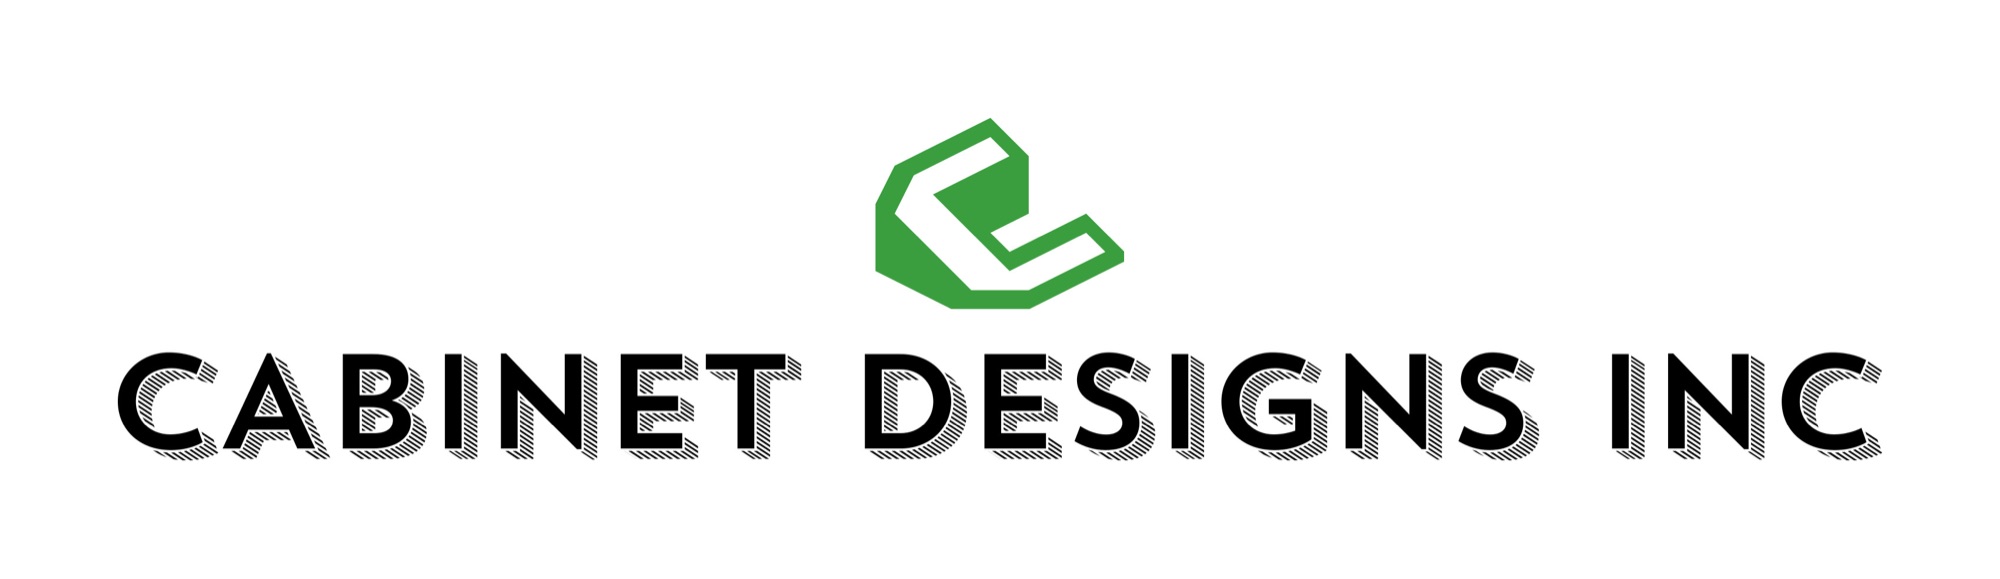 Cabinet Designs Inc Logo